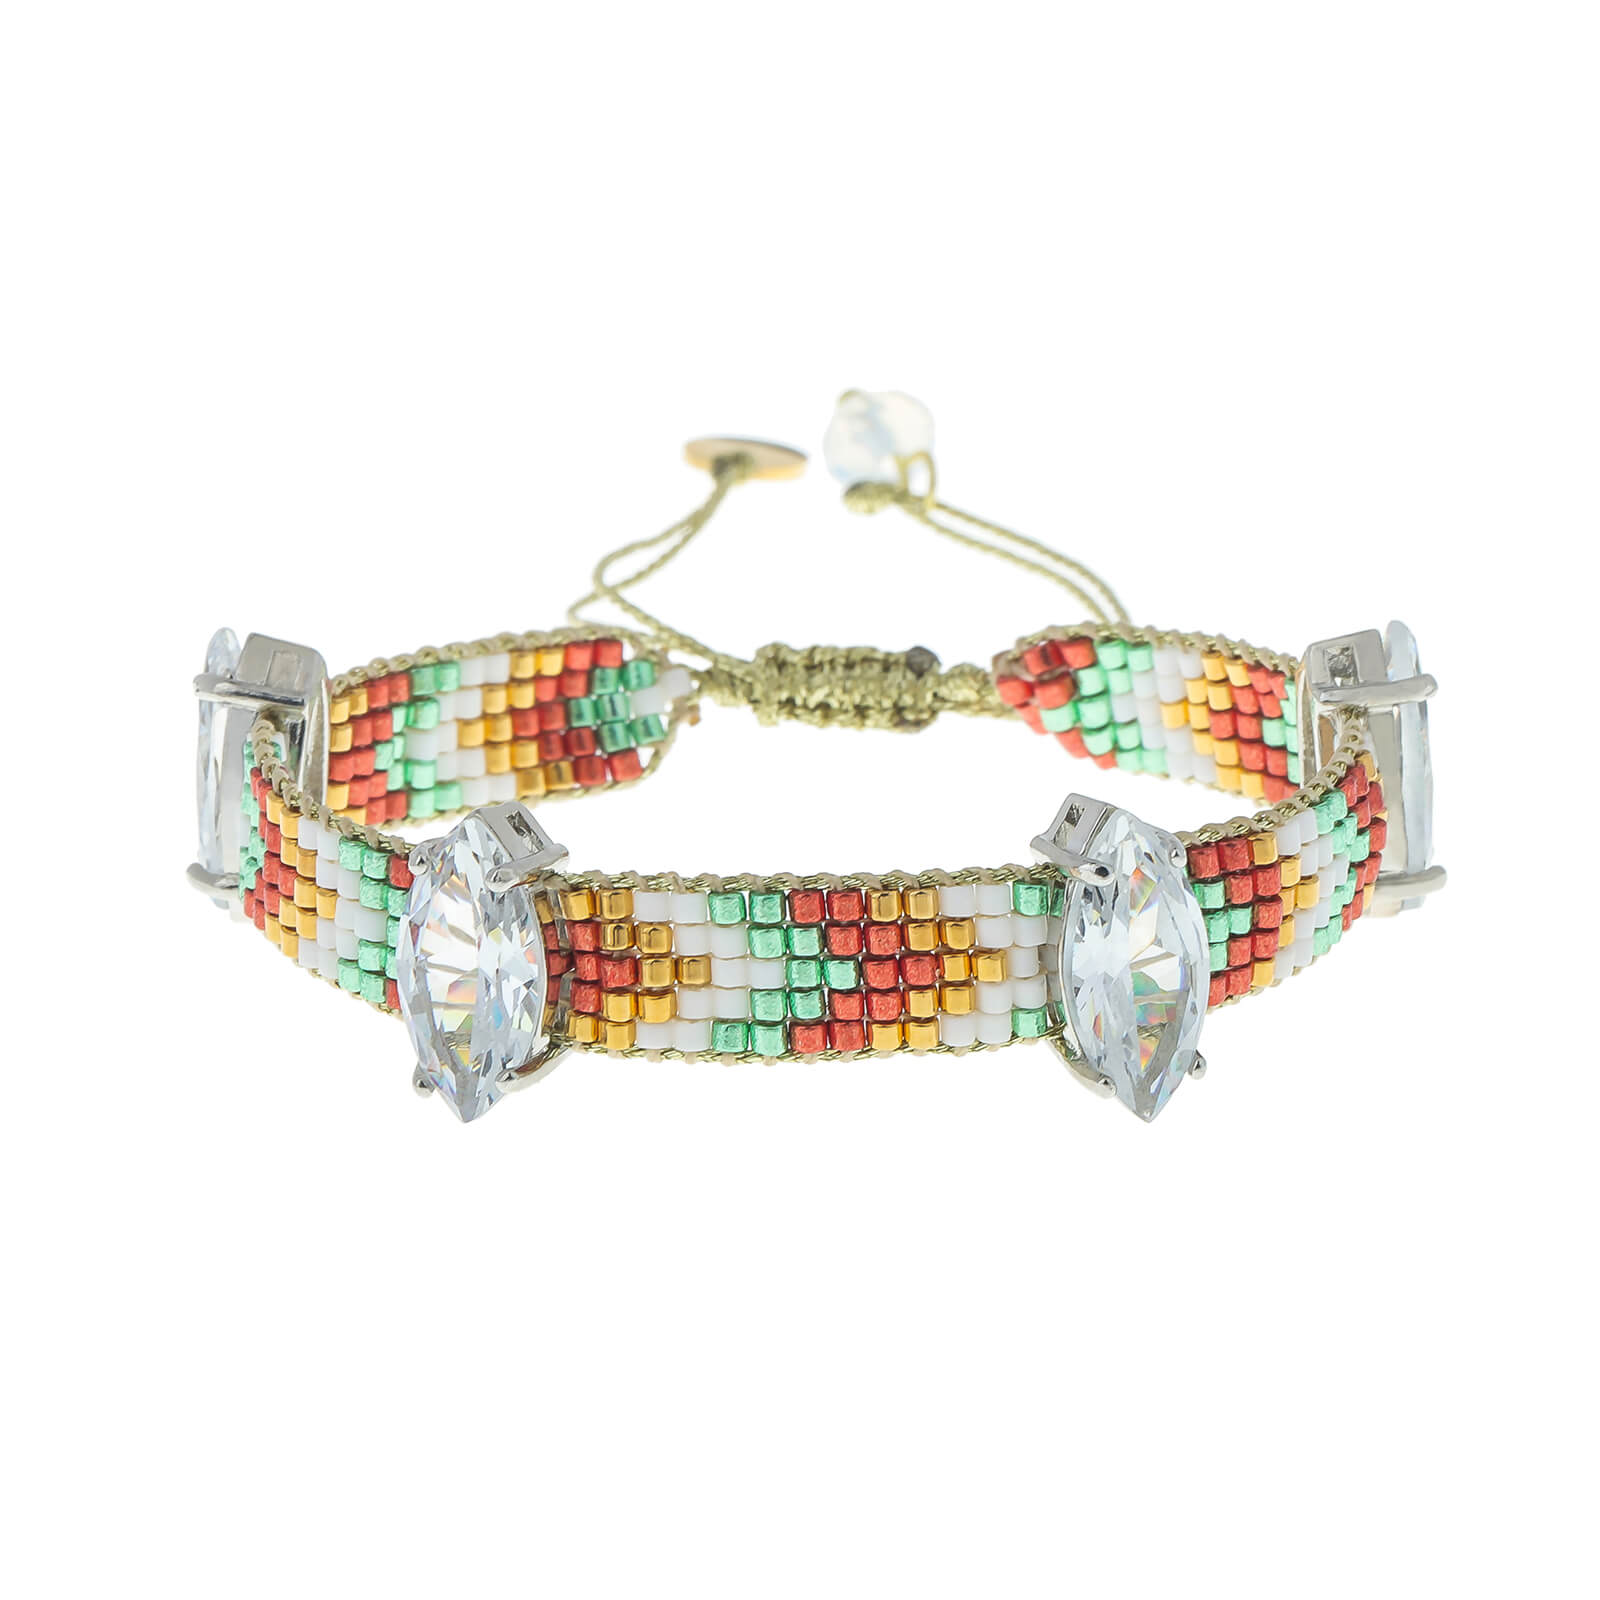 Horse eye Miyuki delica bead bracelet for women